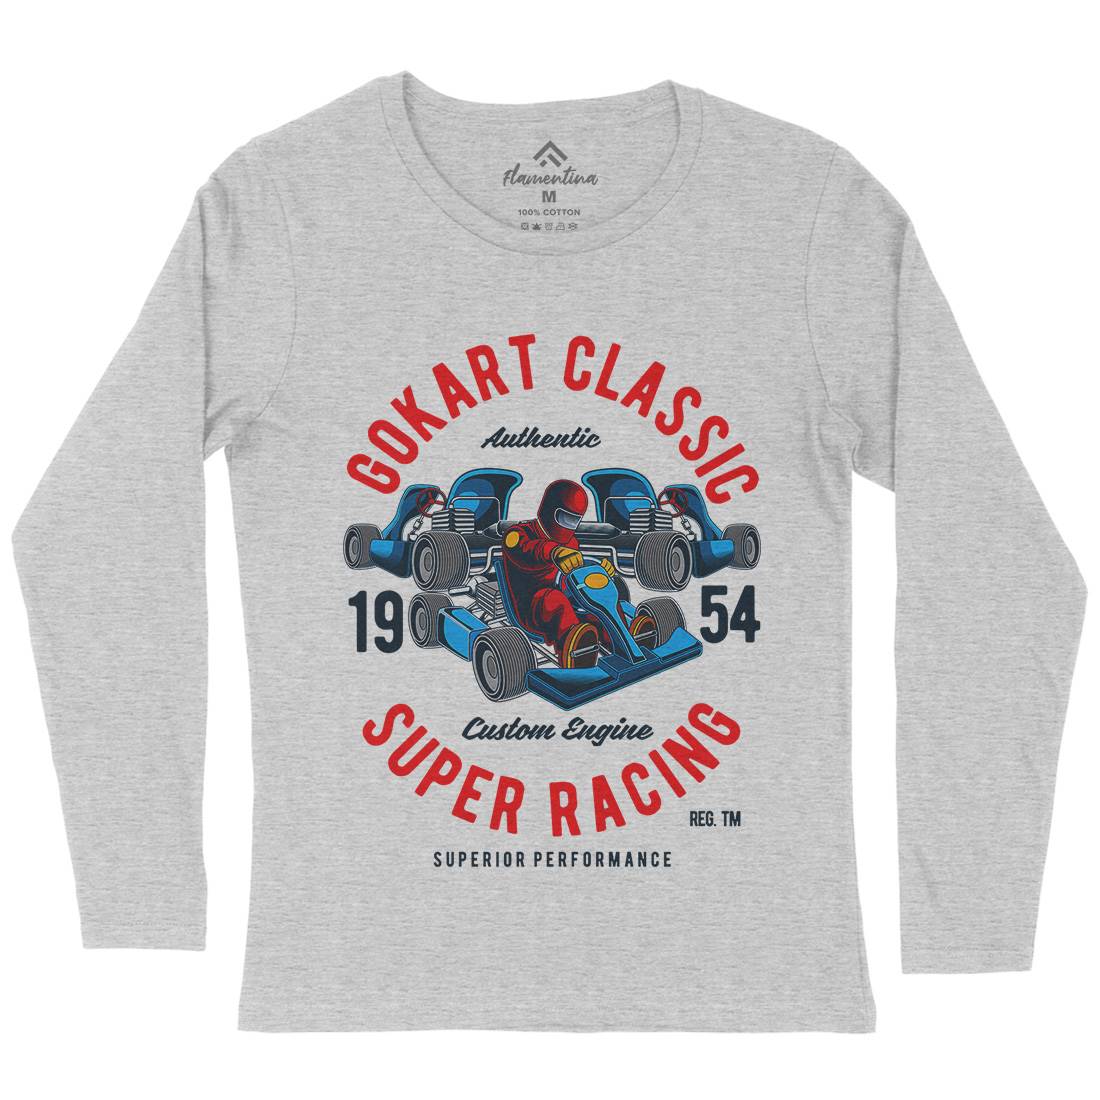 Go-Kart Classic Womens Long Sleeve T-Shirt Sport C366